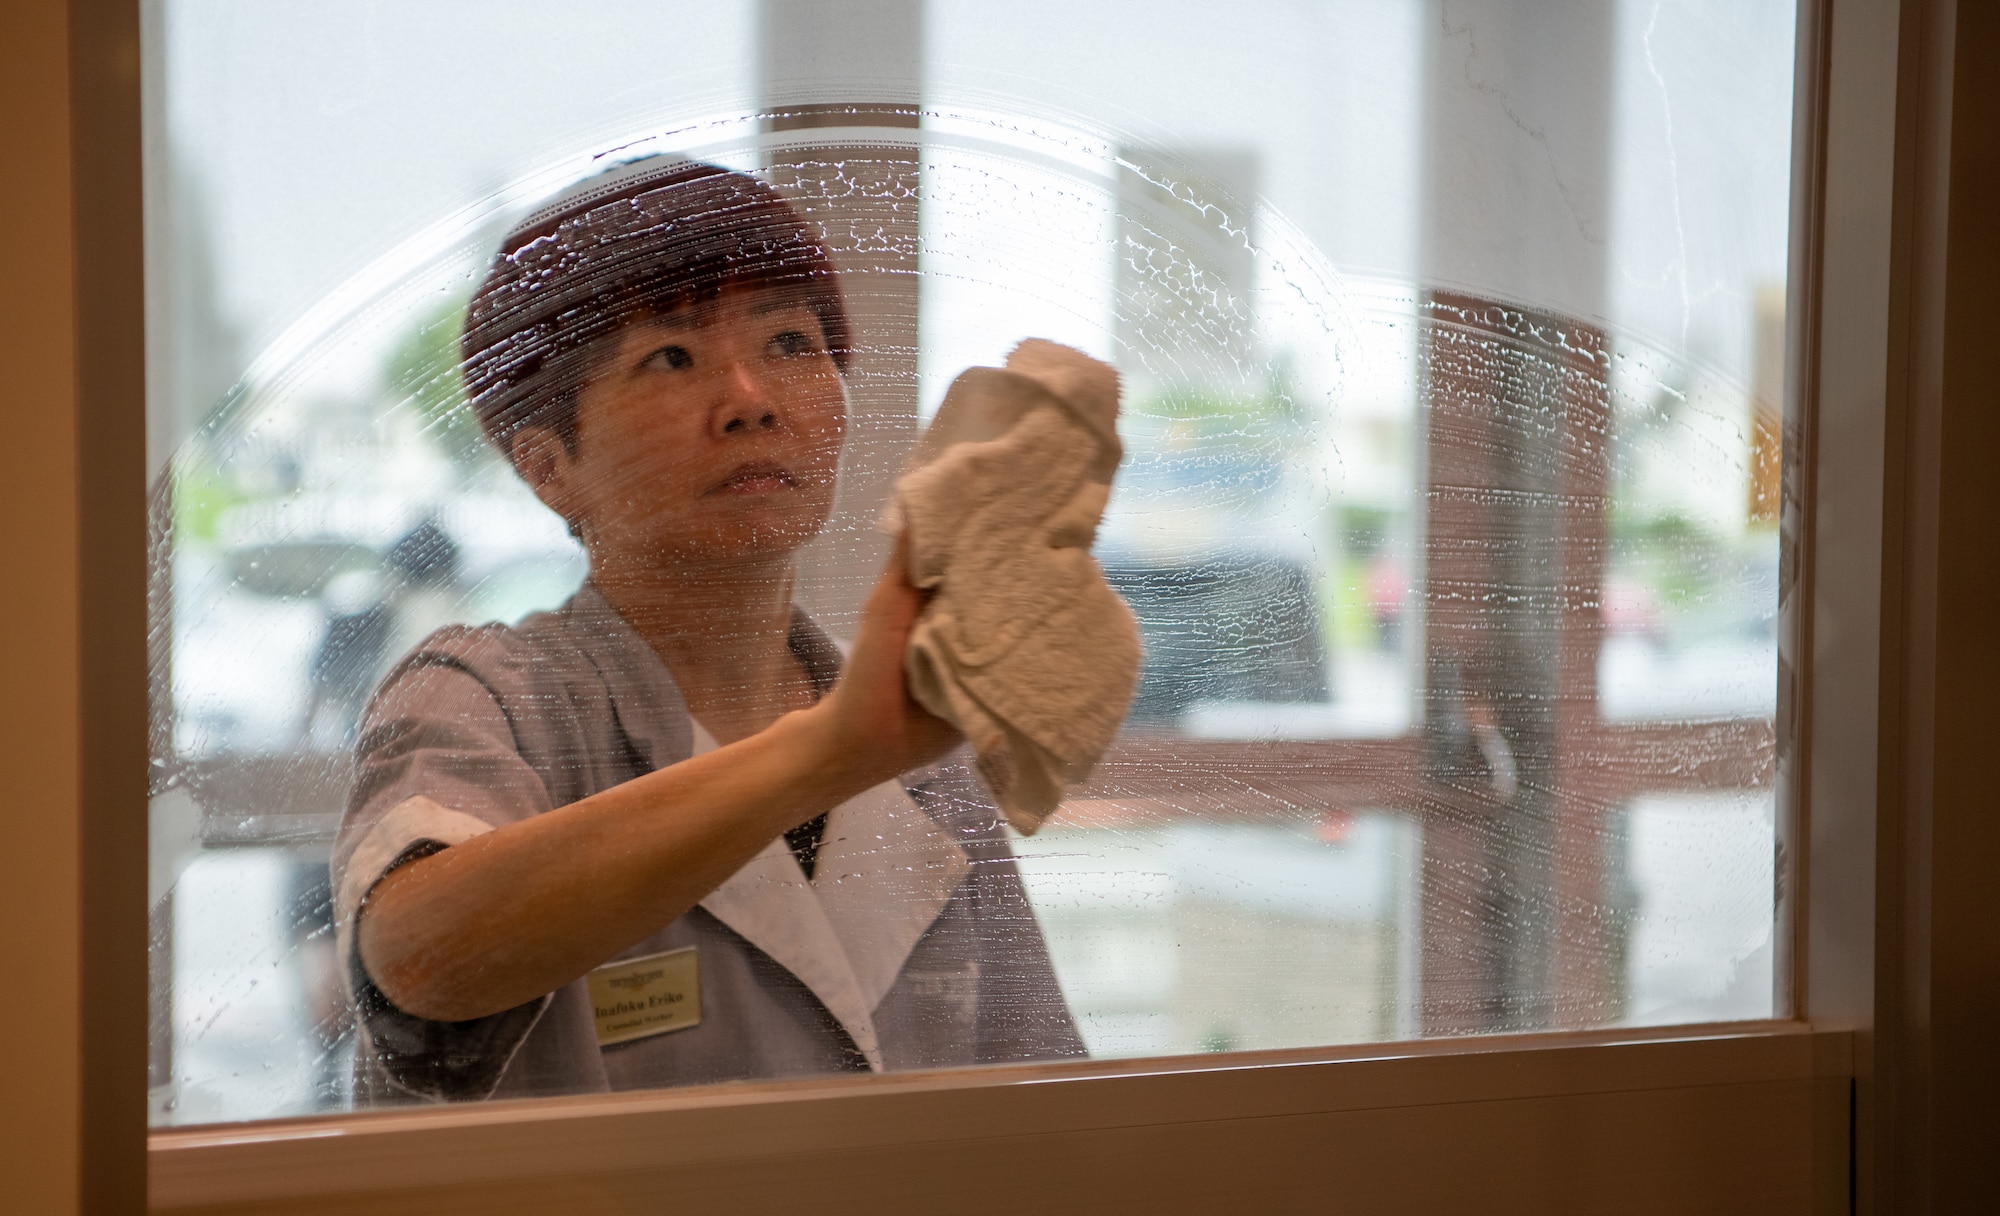 A custodial worker cleans a window.